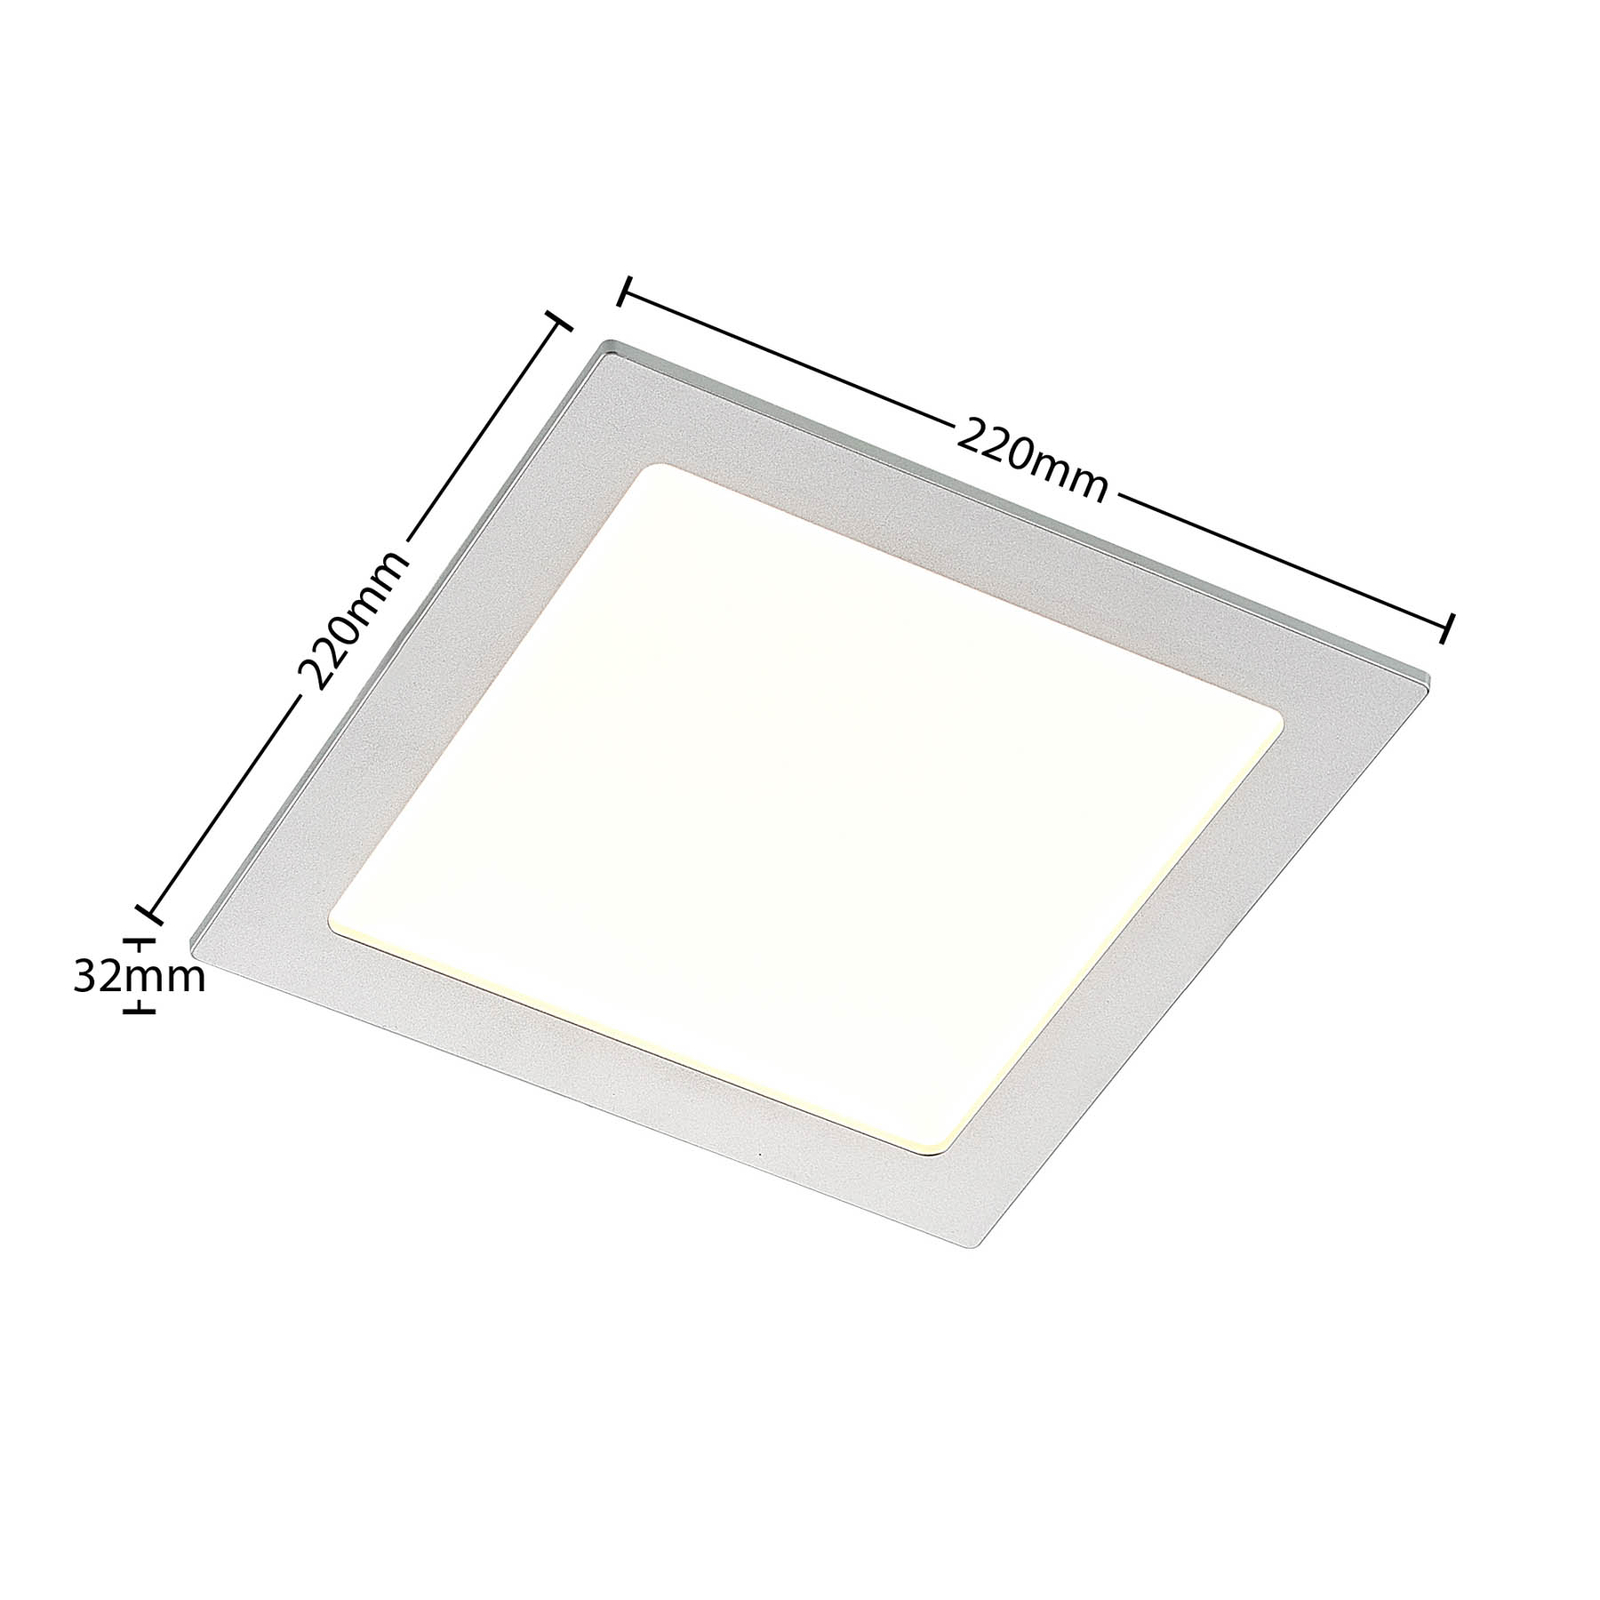 Prios Helina LED-Einbaulampe, silber, 22 cm, 18 W